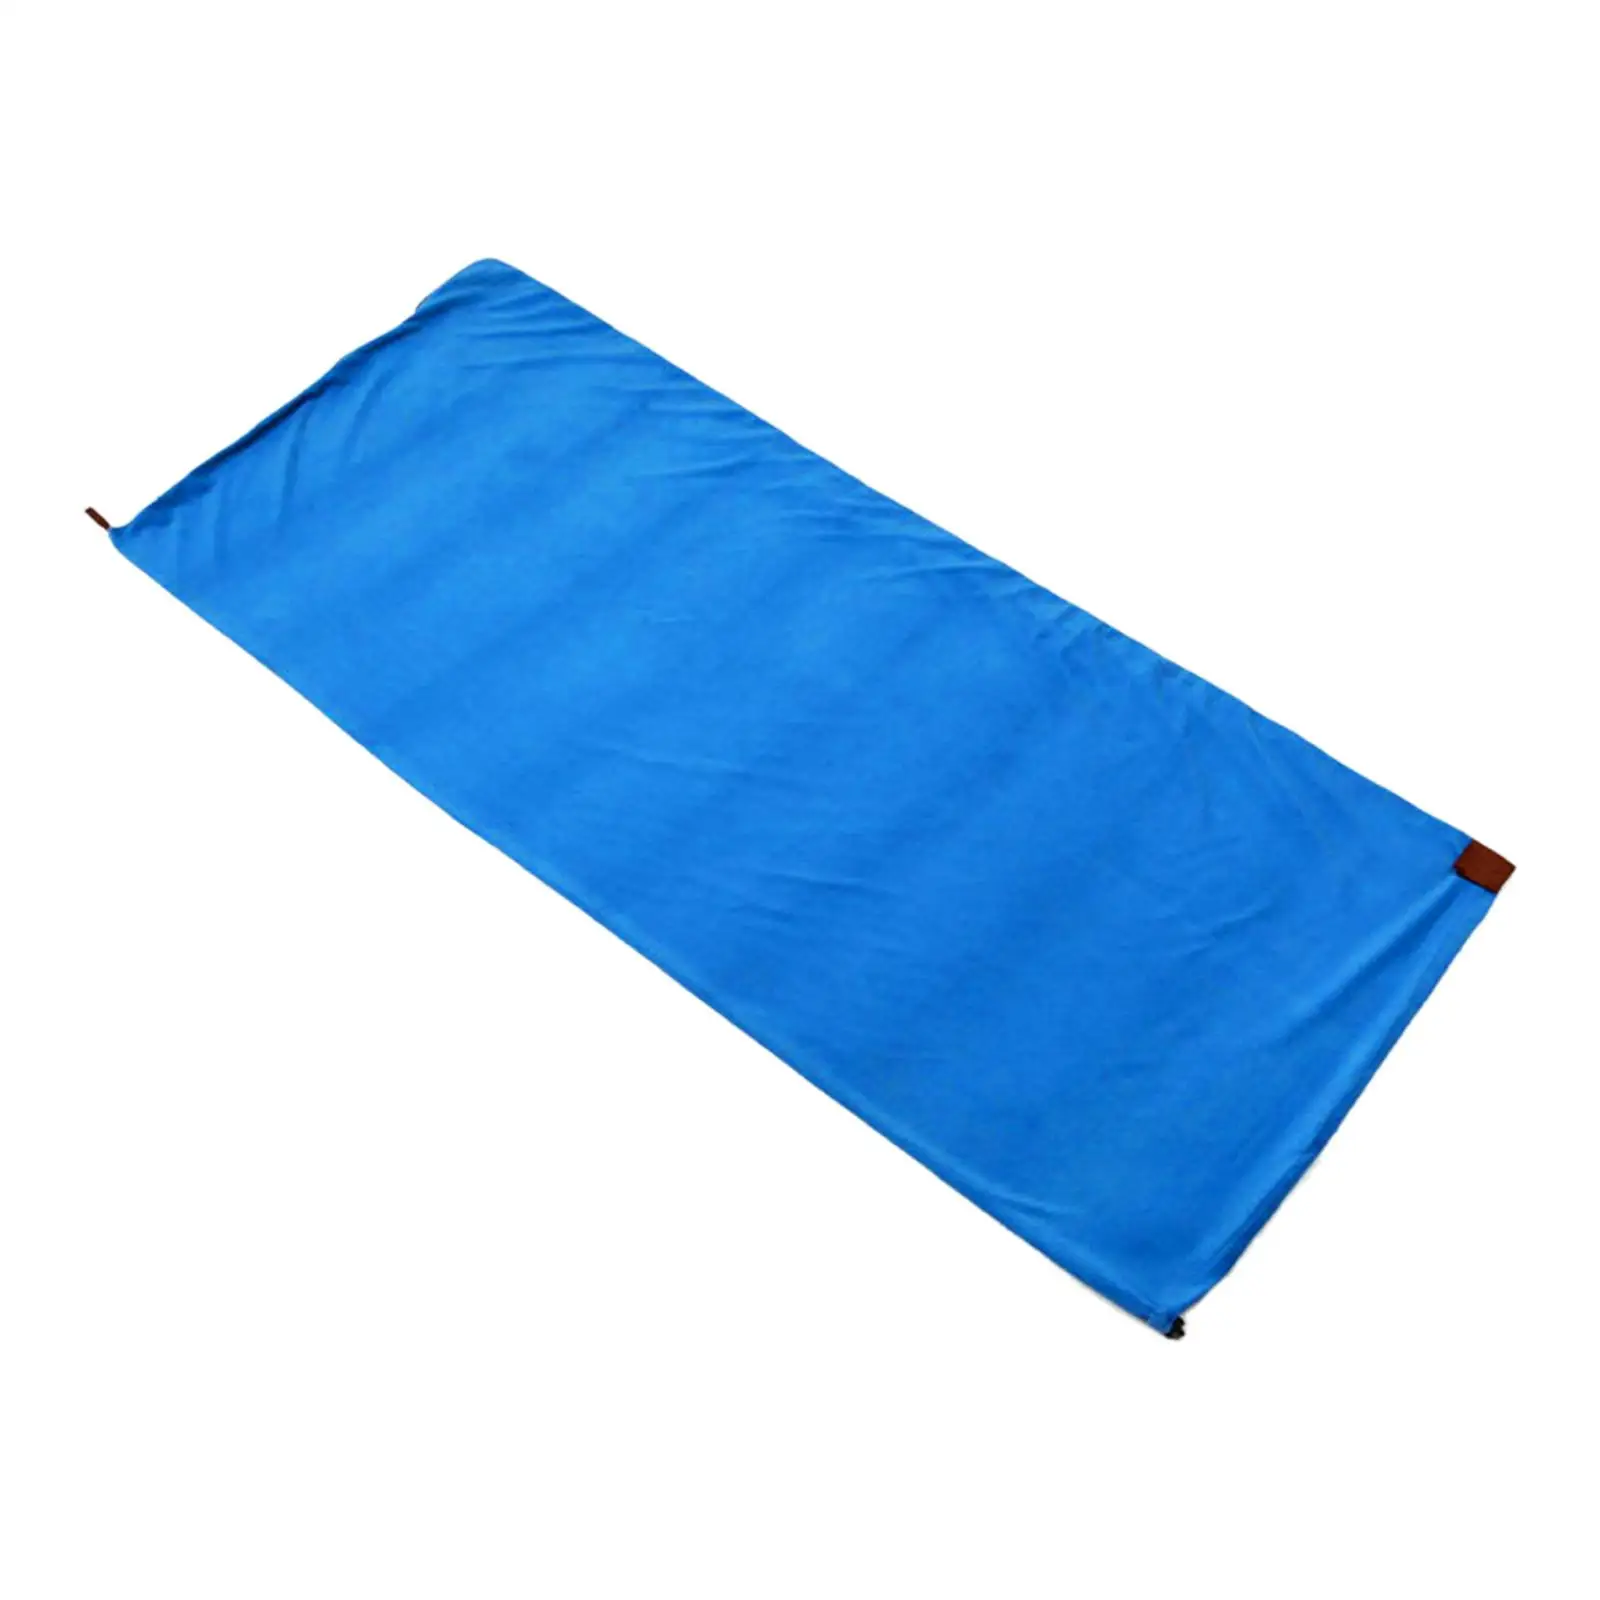 Portable Camping Blanket Outdoor Emergency Soft Fleece Sleeping Bag Liner for